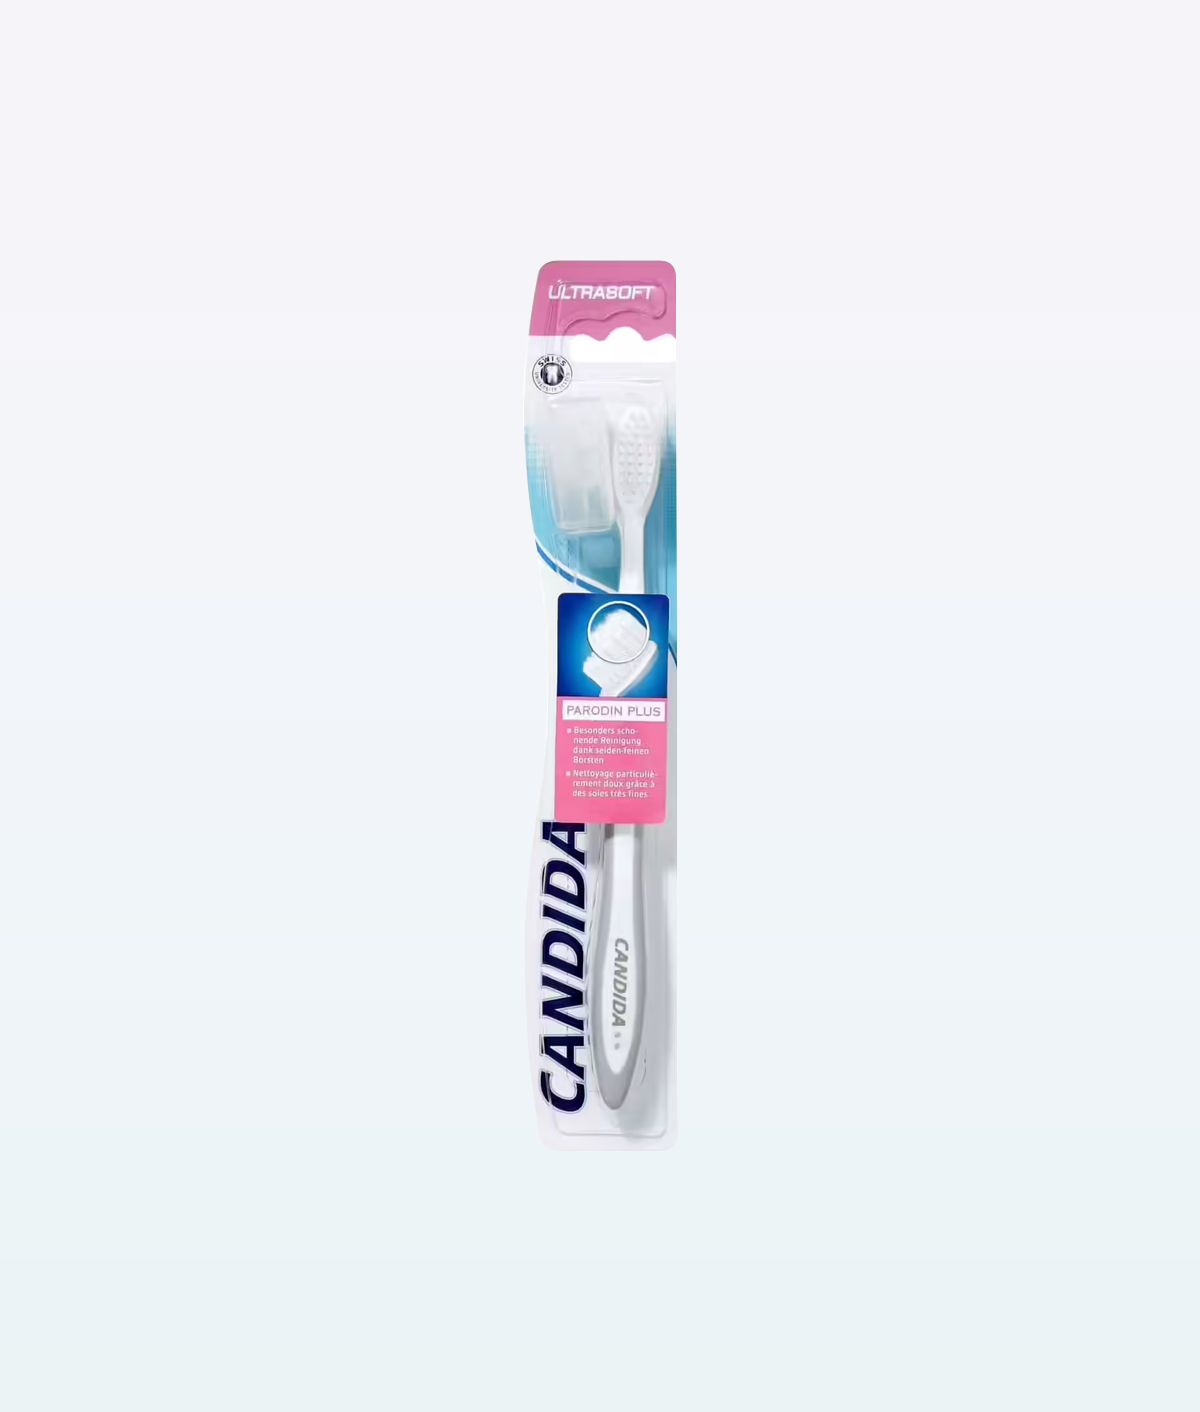 Candida-Toothbrush-Parodin-Plus